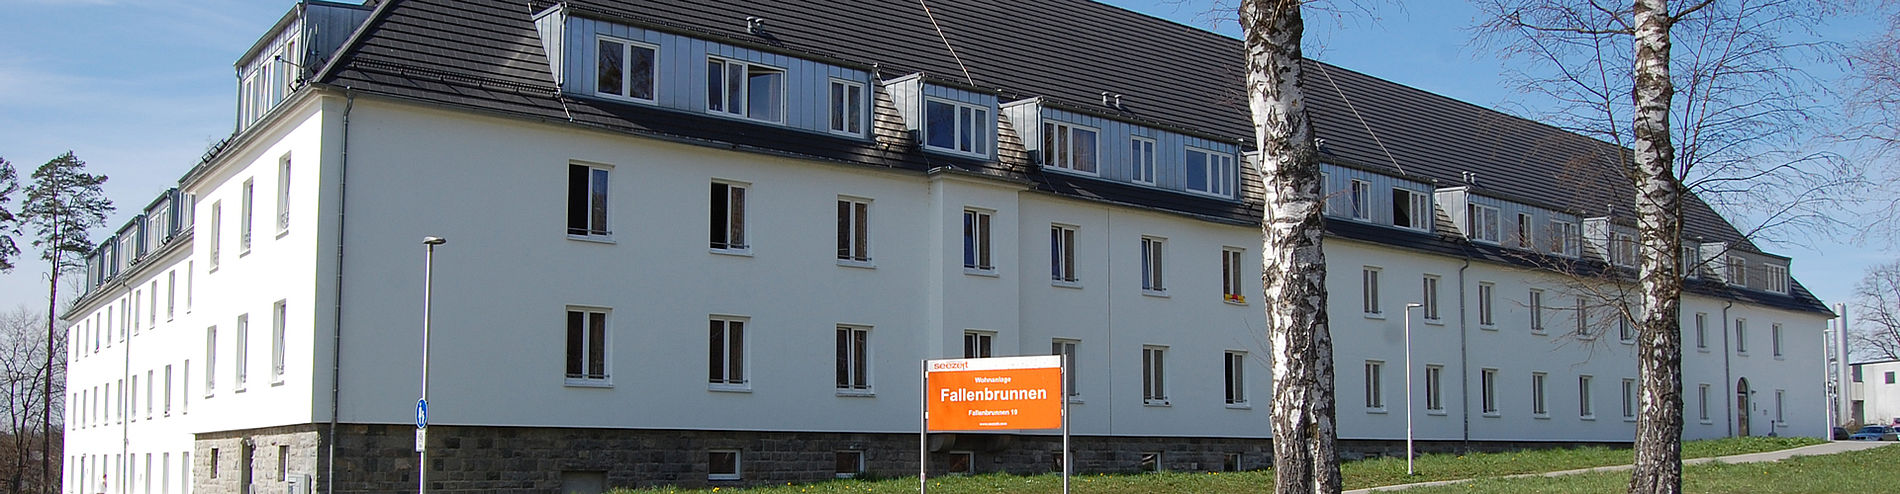 Header - Halls of Residence Fallenbrunnen 